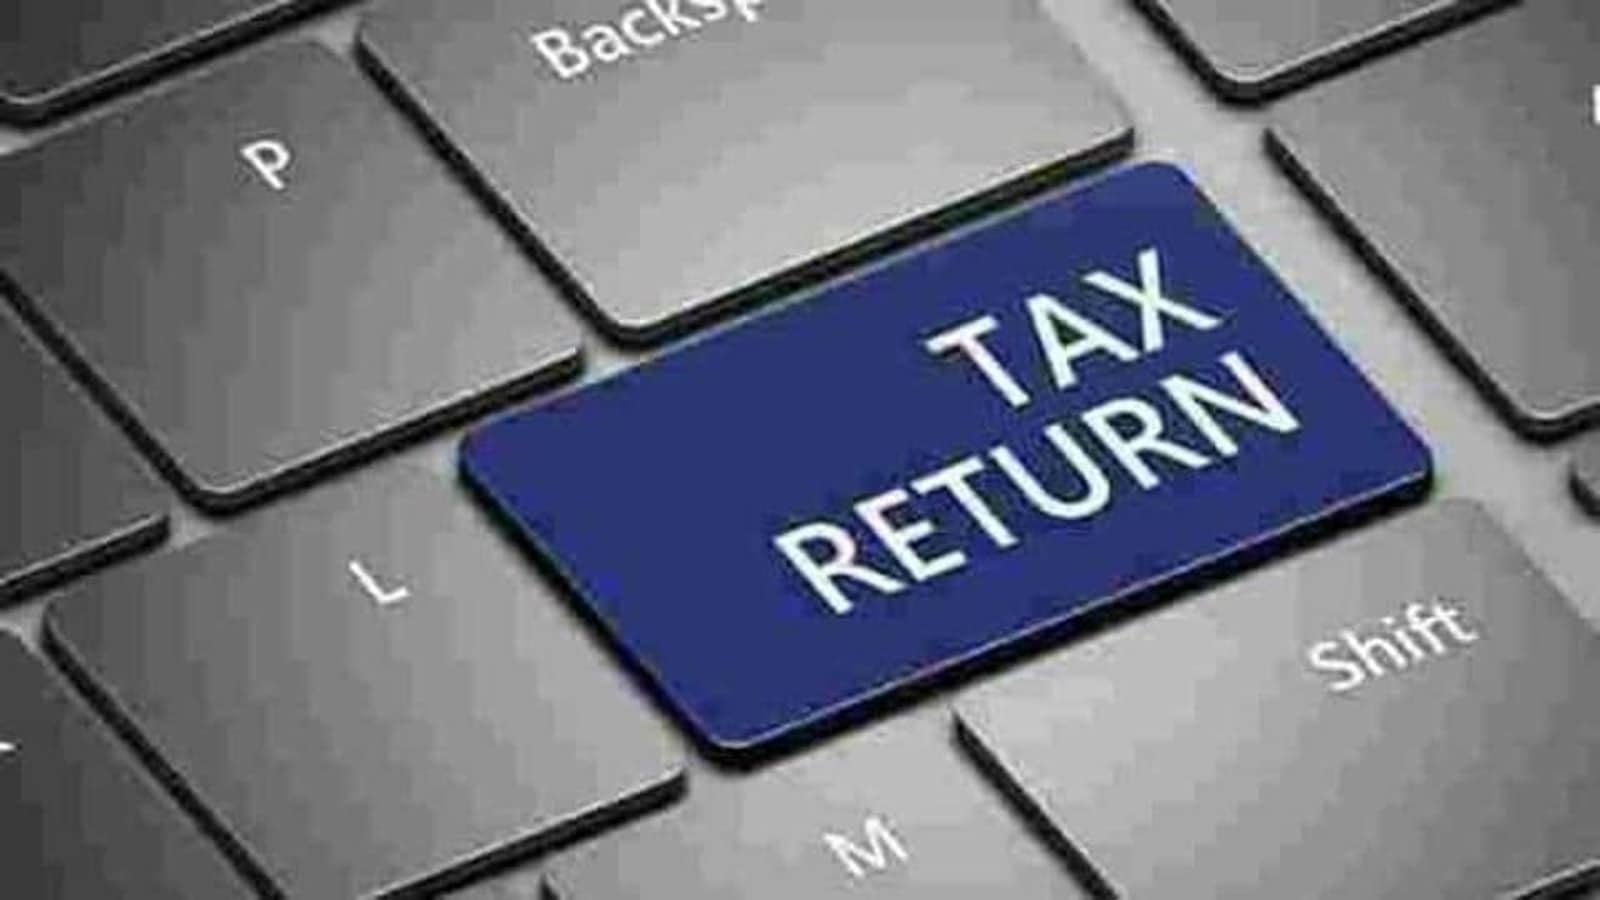 irs-tax-refunds-dates-2022-veche-info-22